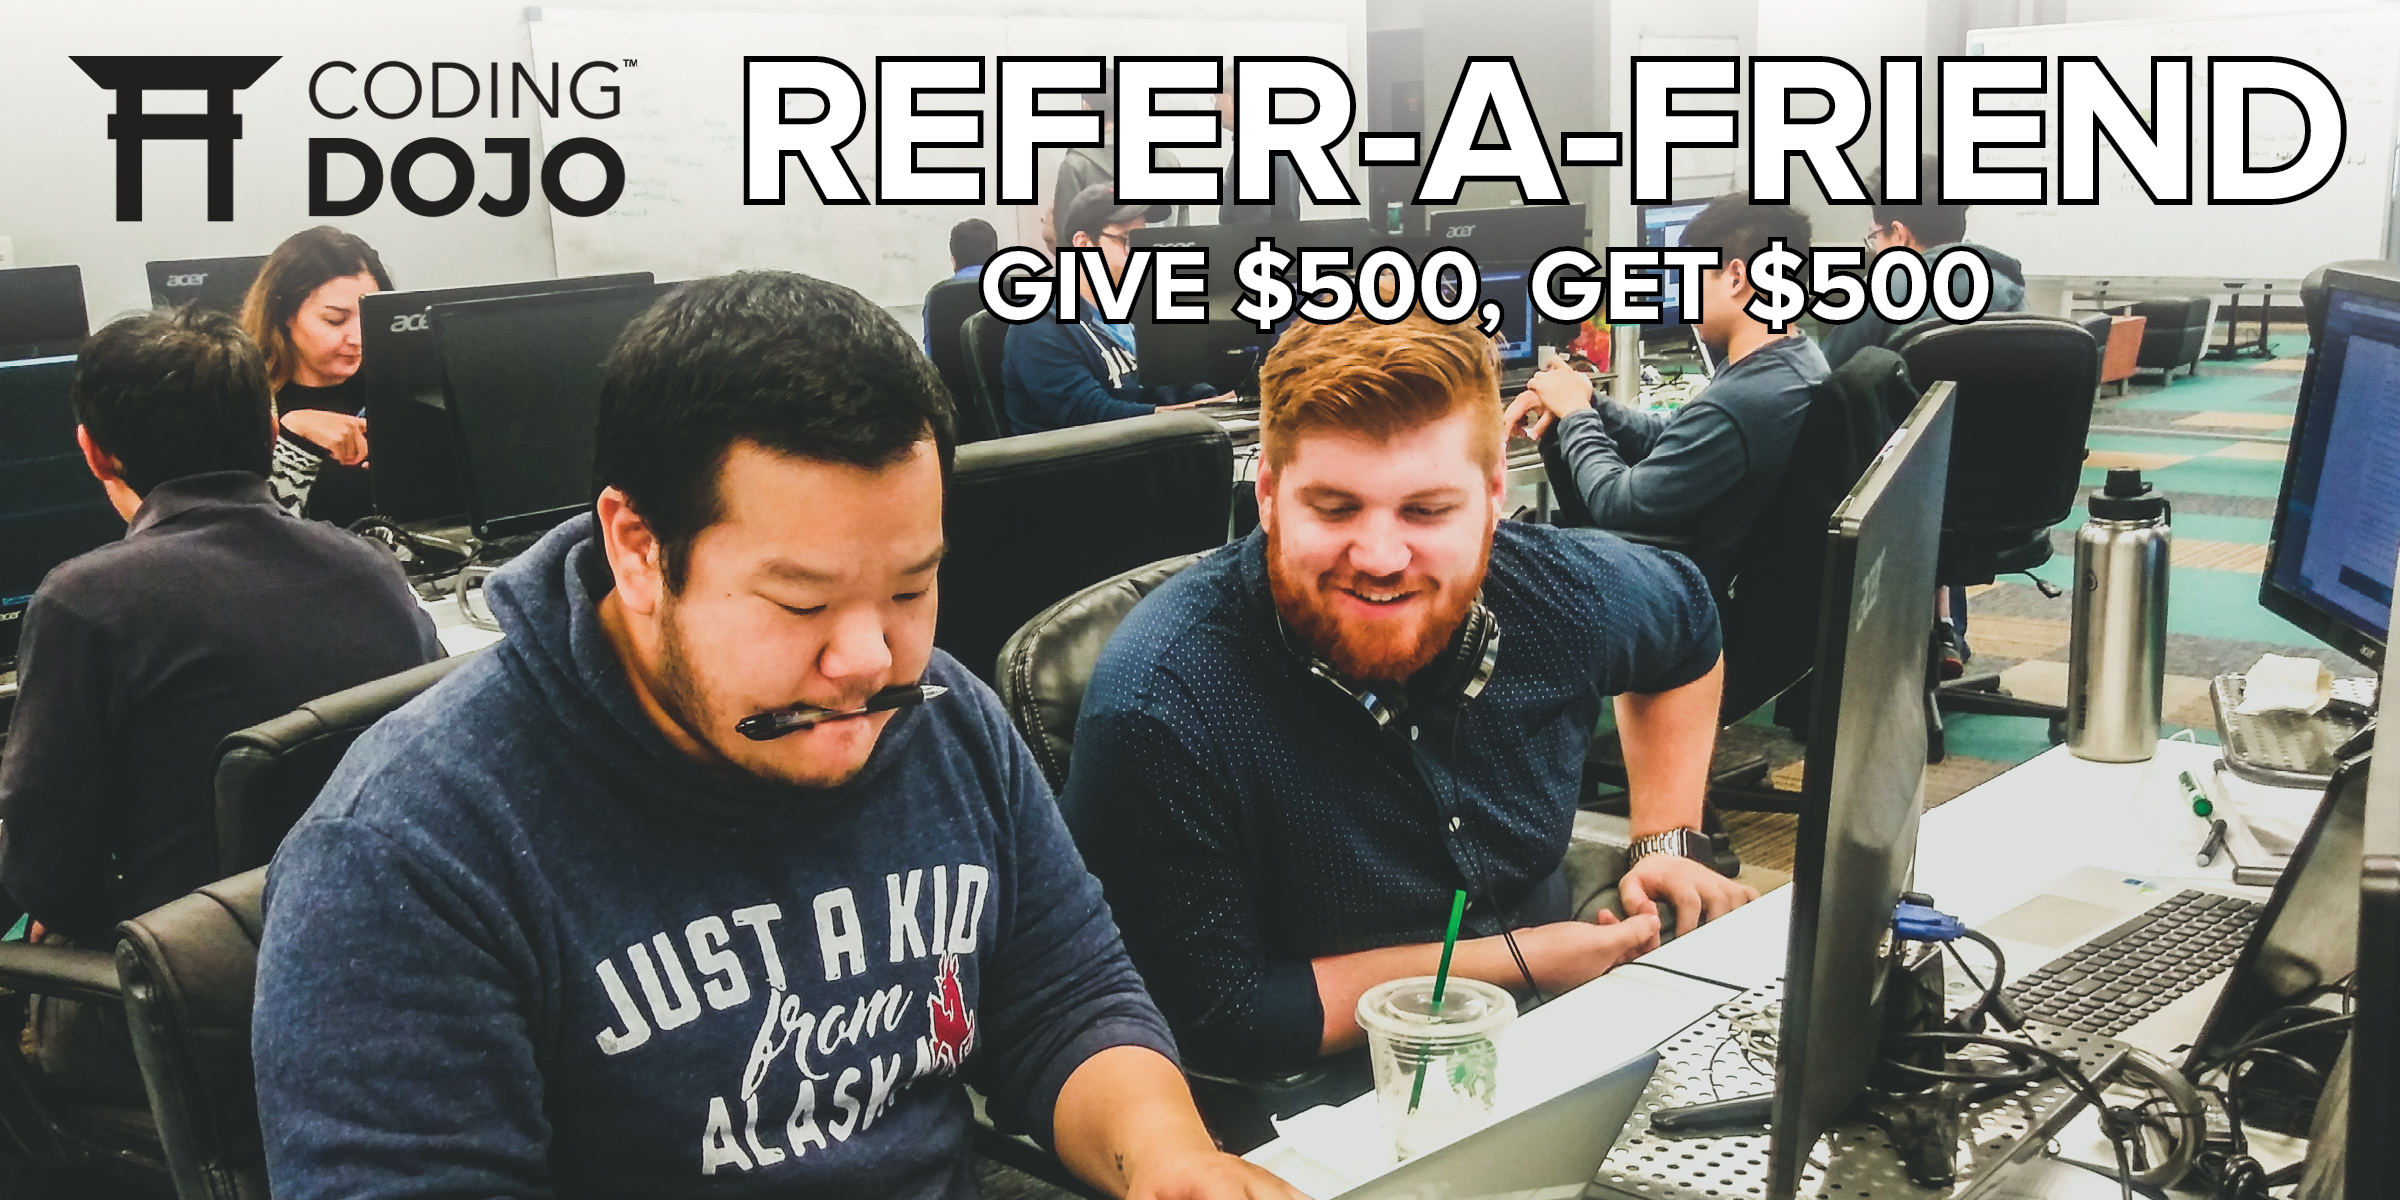 Coding Dojos referral program is back in a big way: Give $500, Get $500.